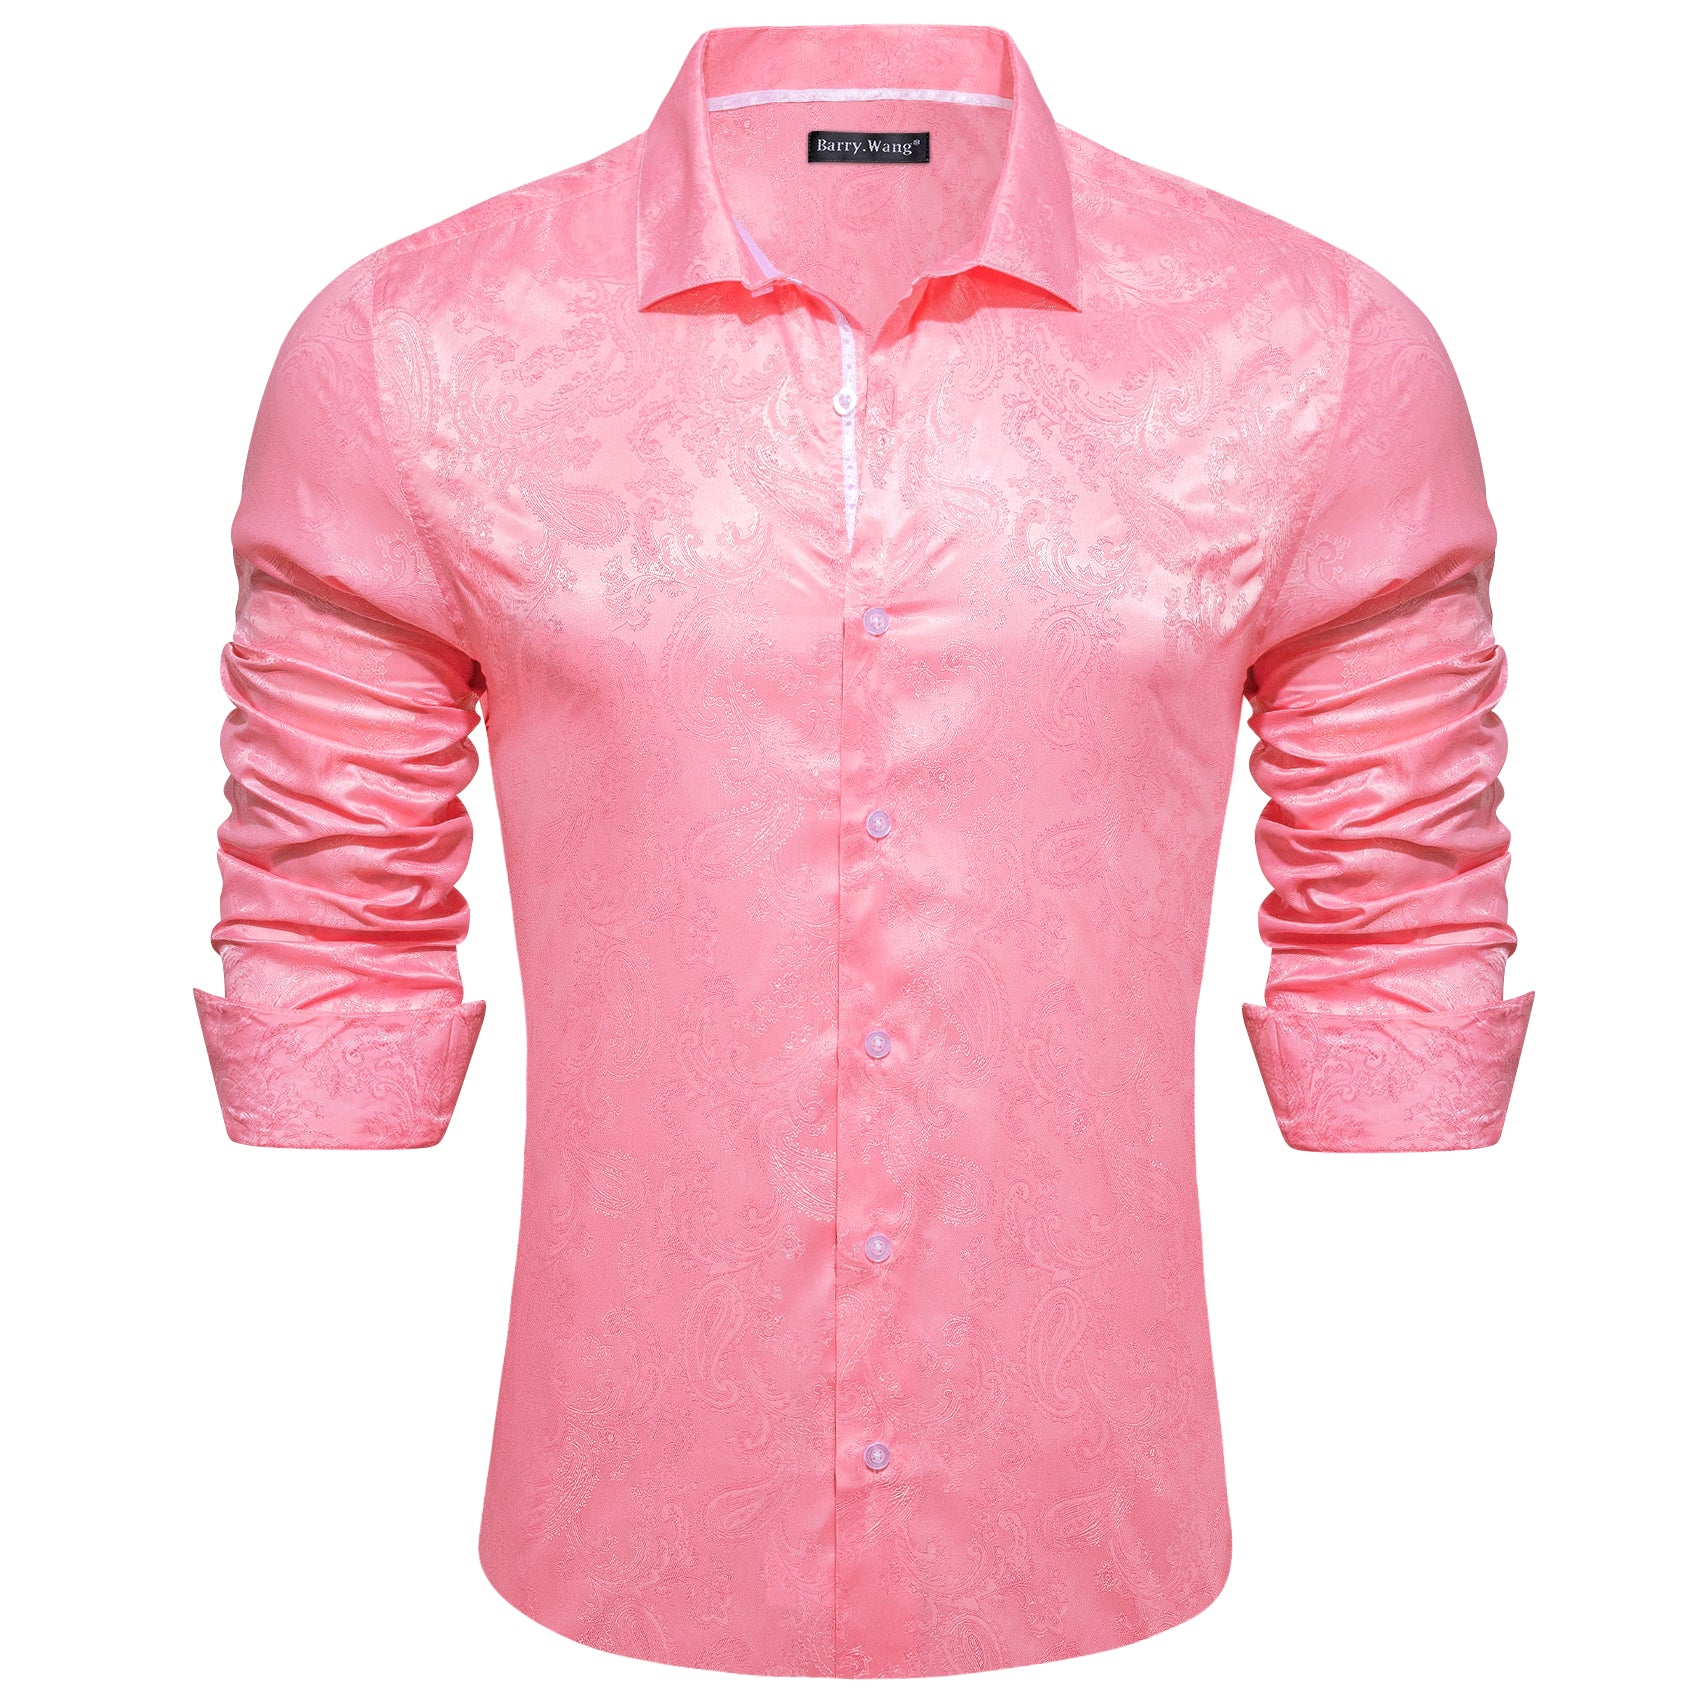 Barry.wang Pink Paisley Silk Men's Shirt